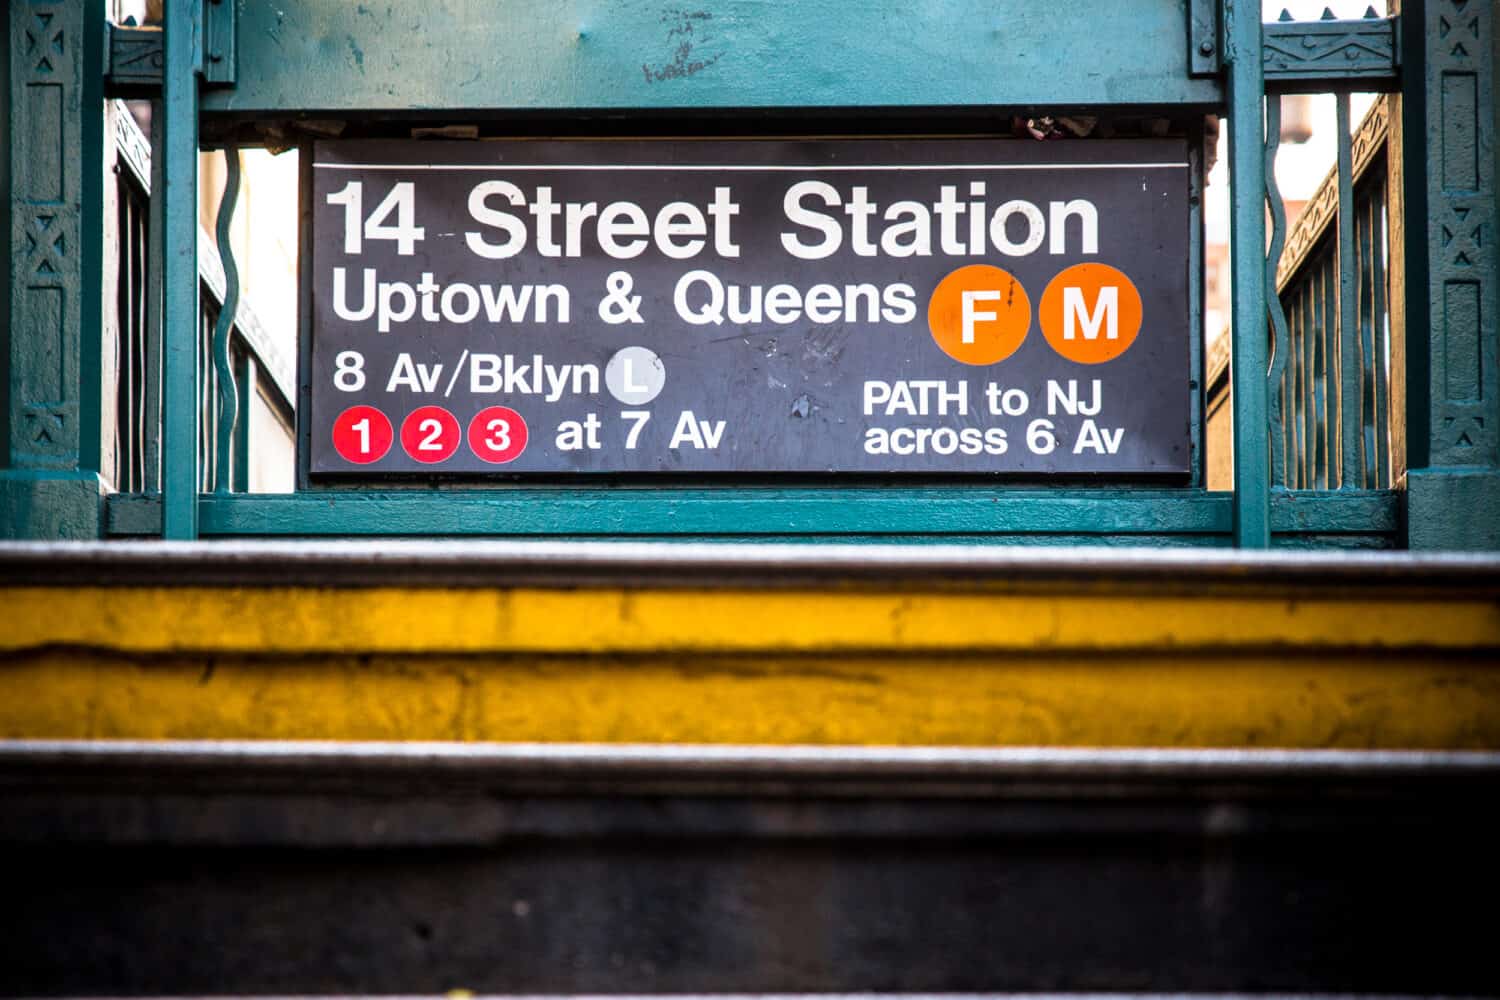 New York City subway entrance at 14 Street station